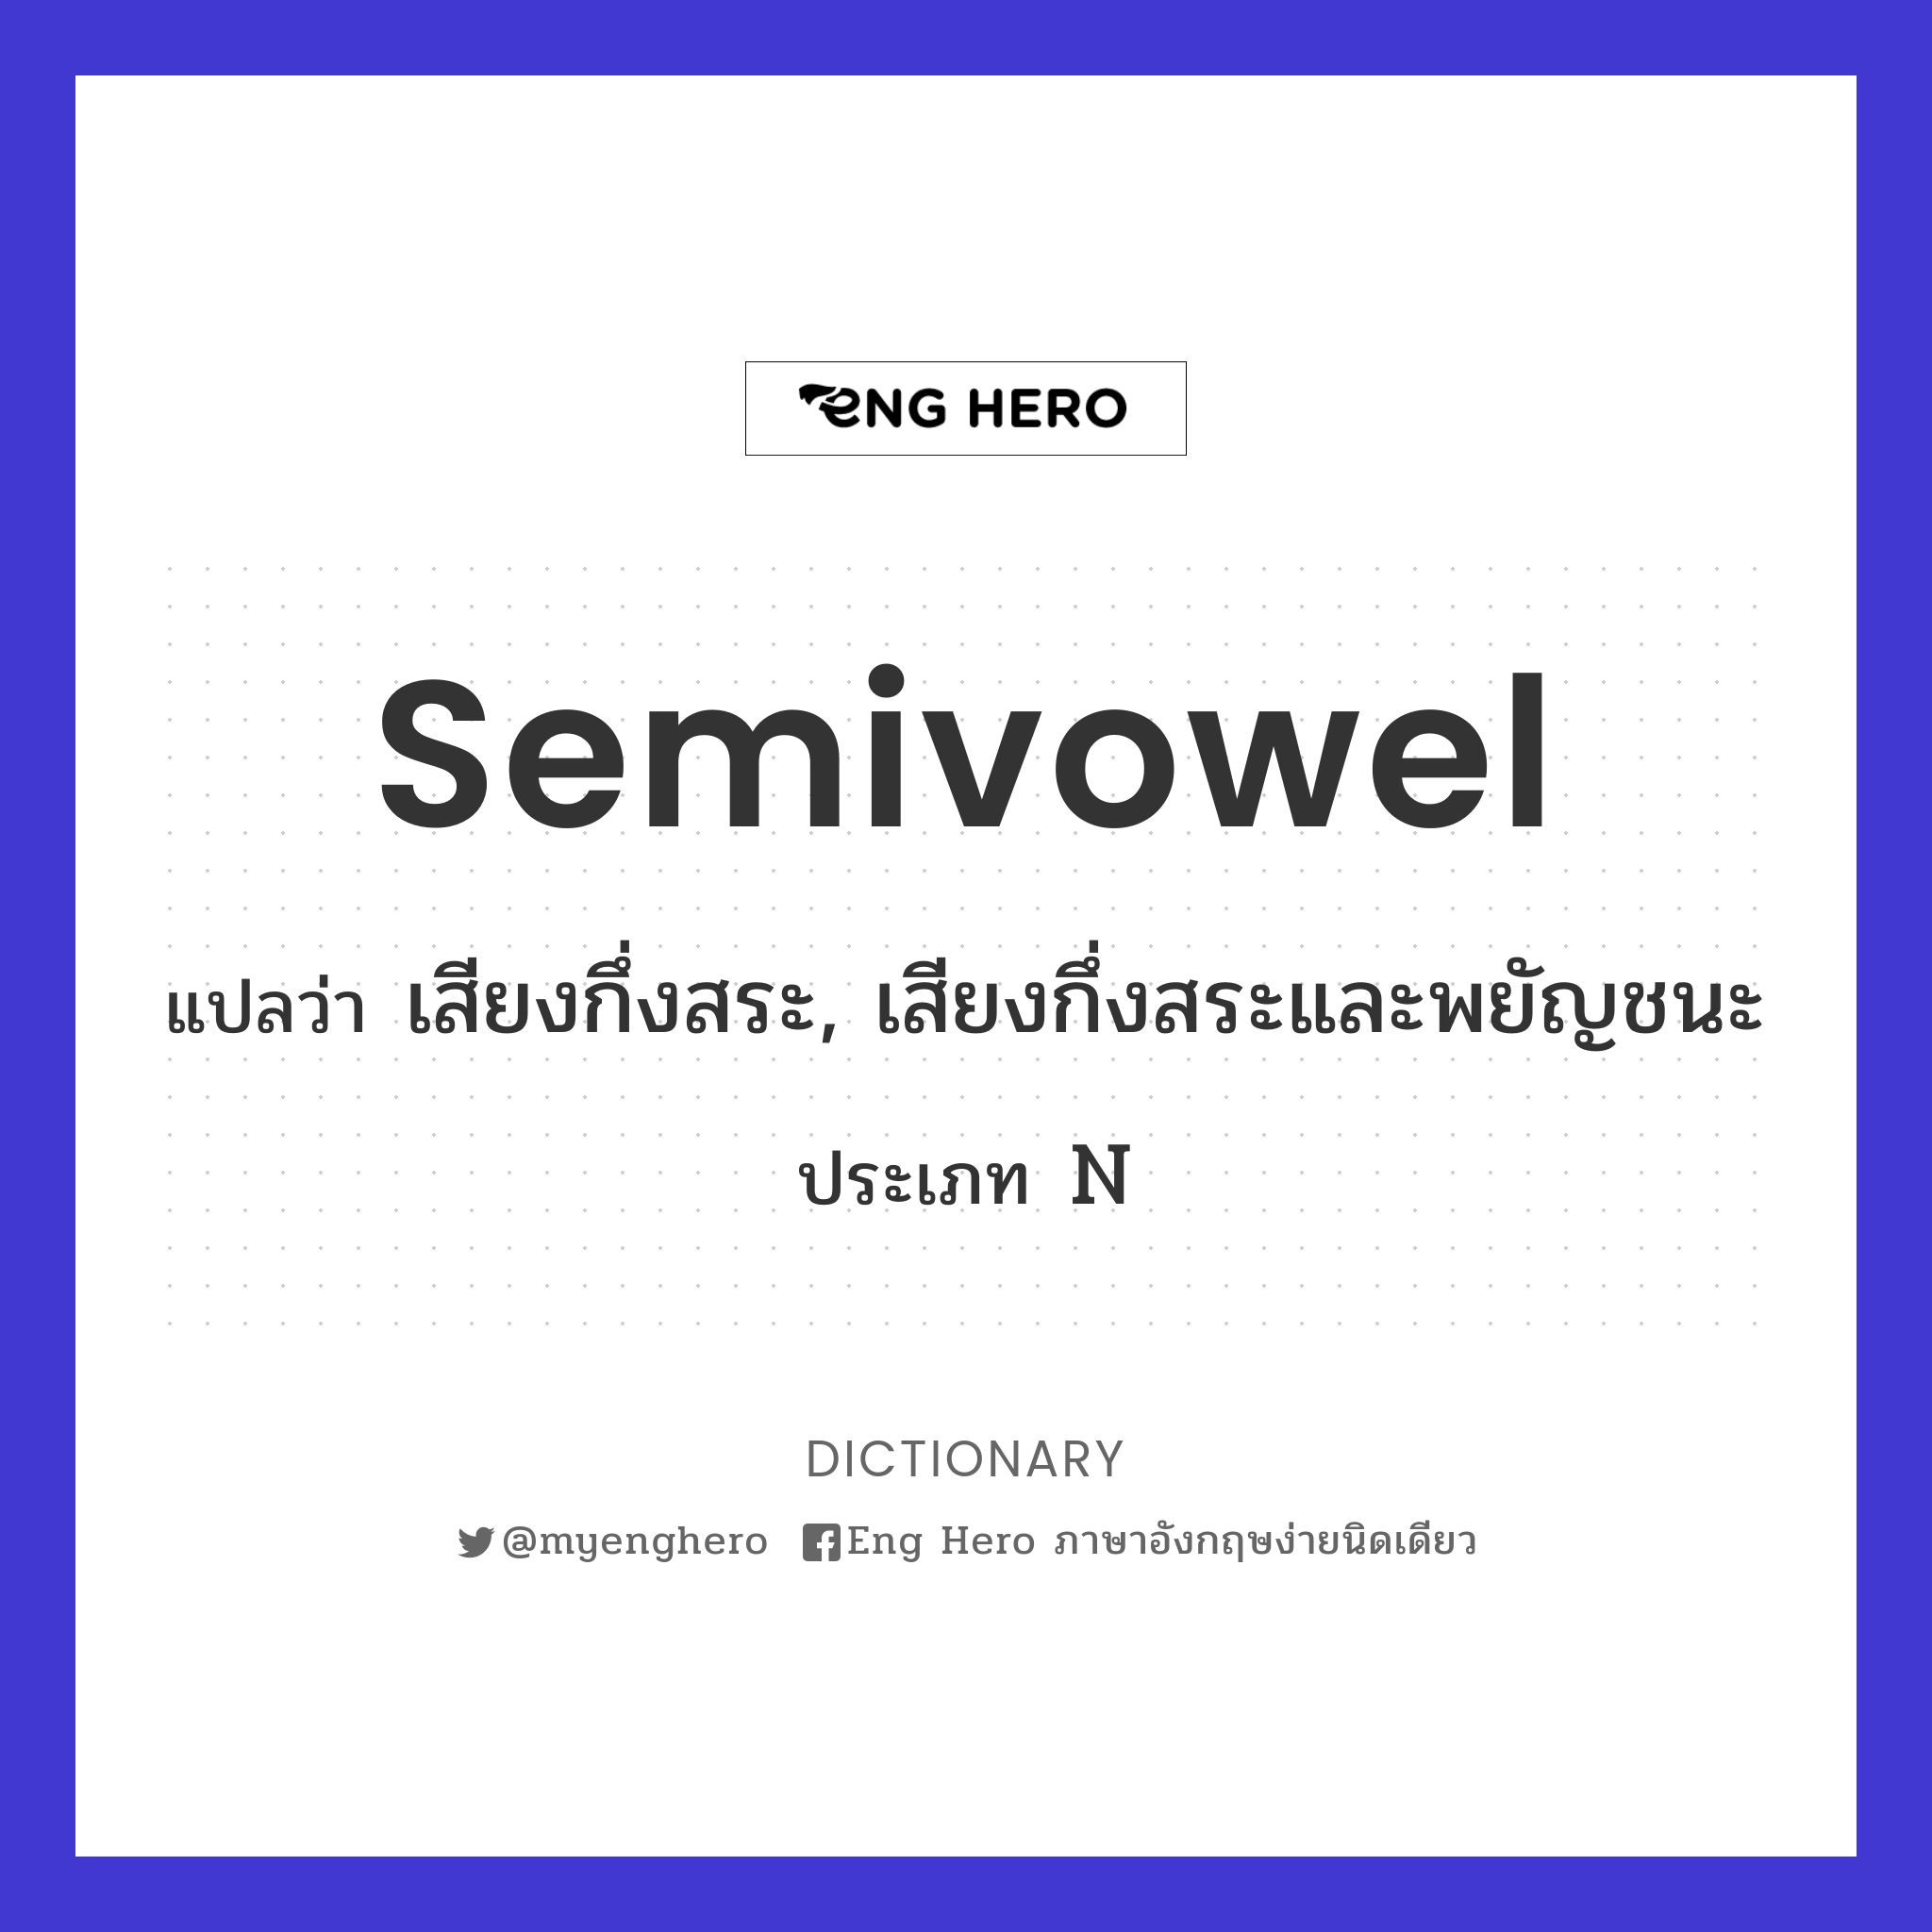 semivowel